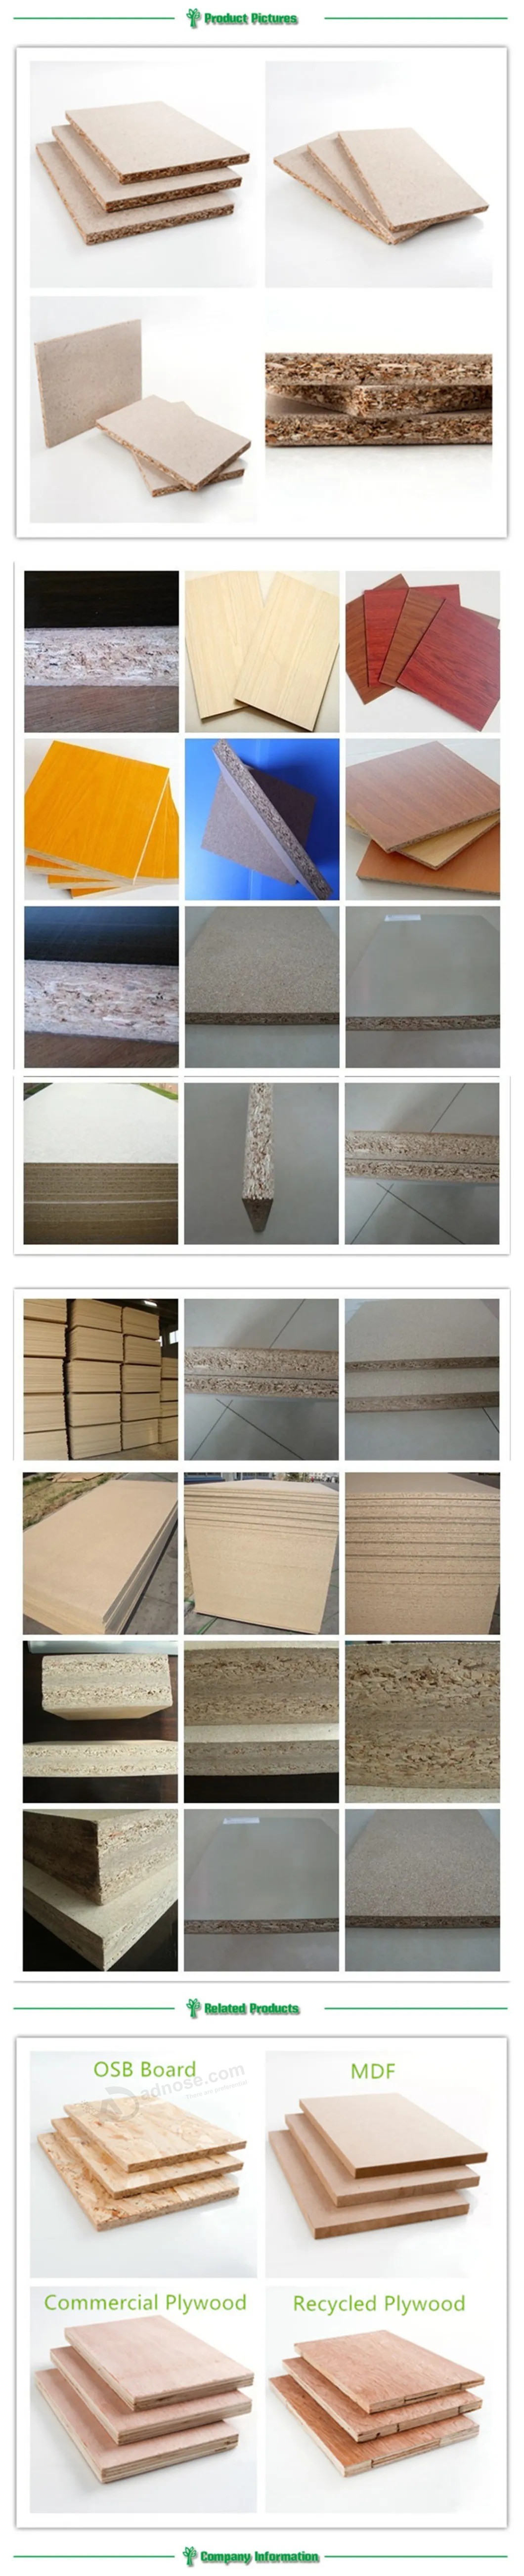 Großhandel Spanplatten / Spanplatten / Holzlagenholz Melamin laminierte Platten Preis für Möbel